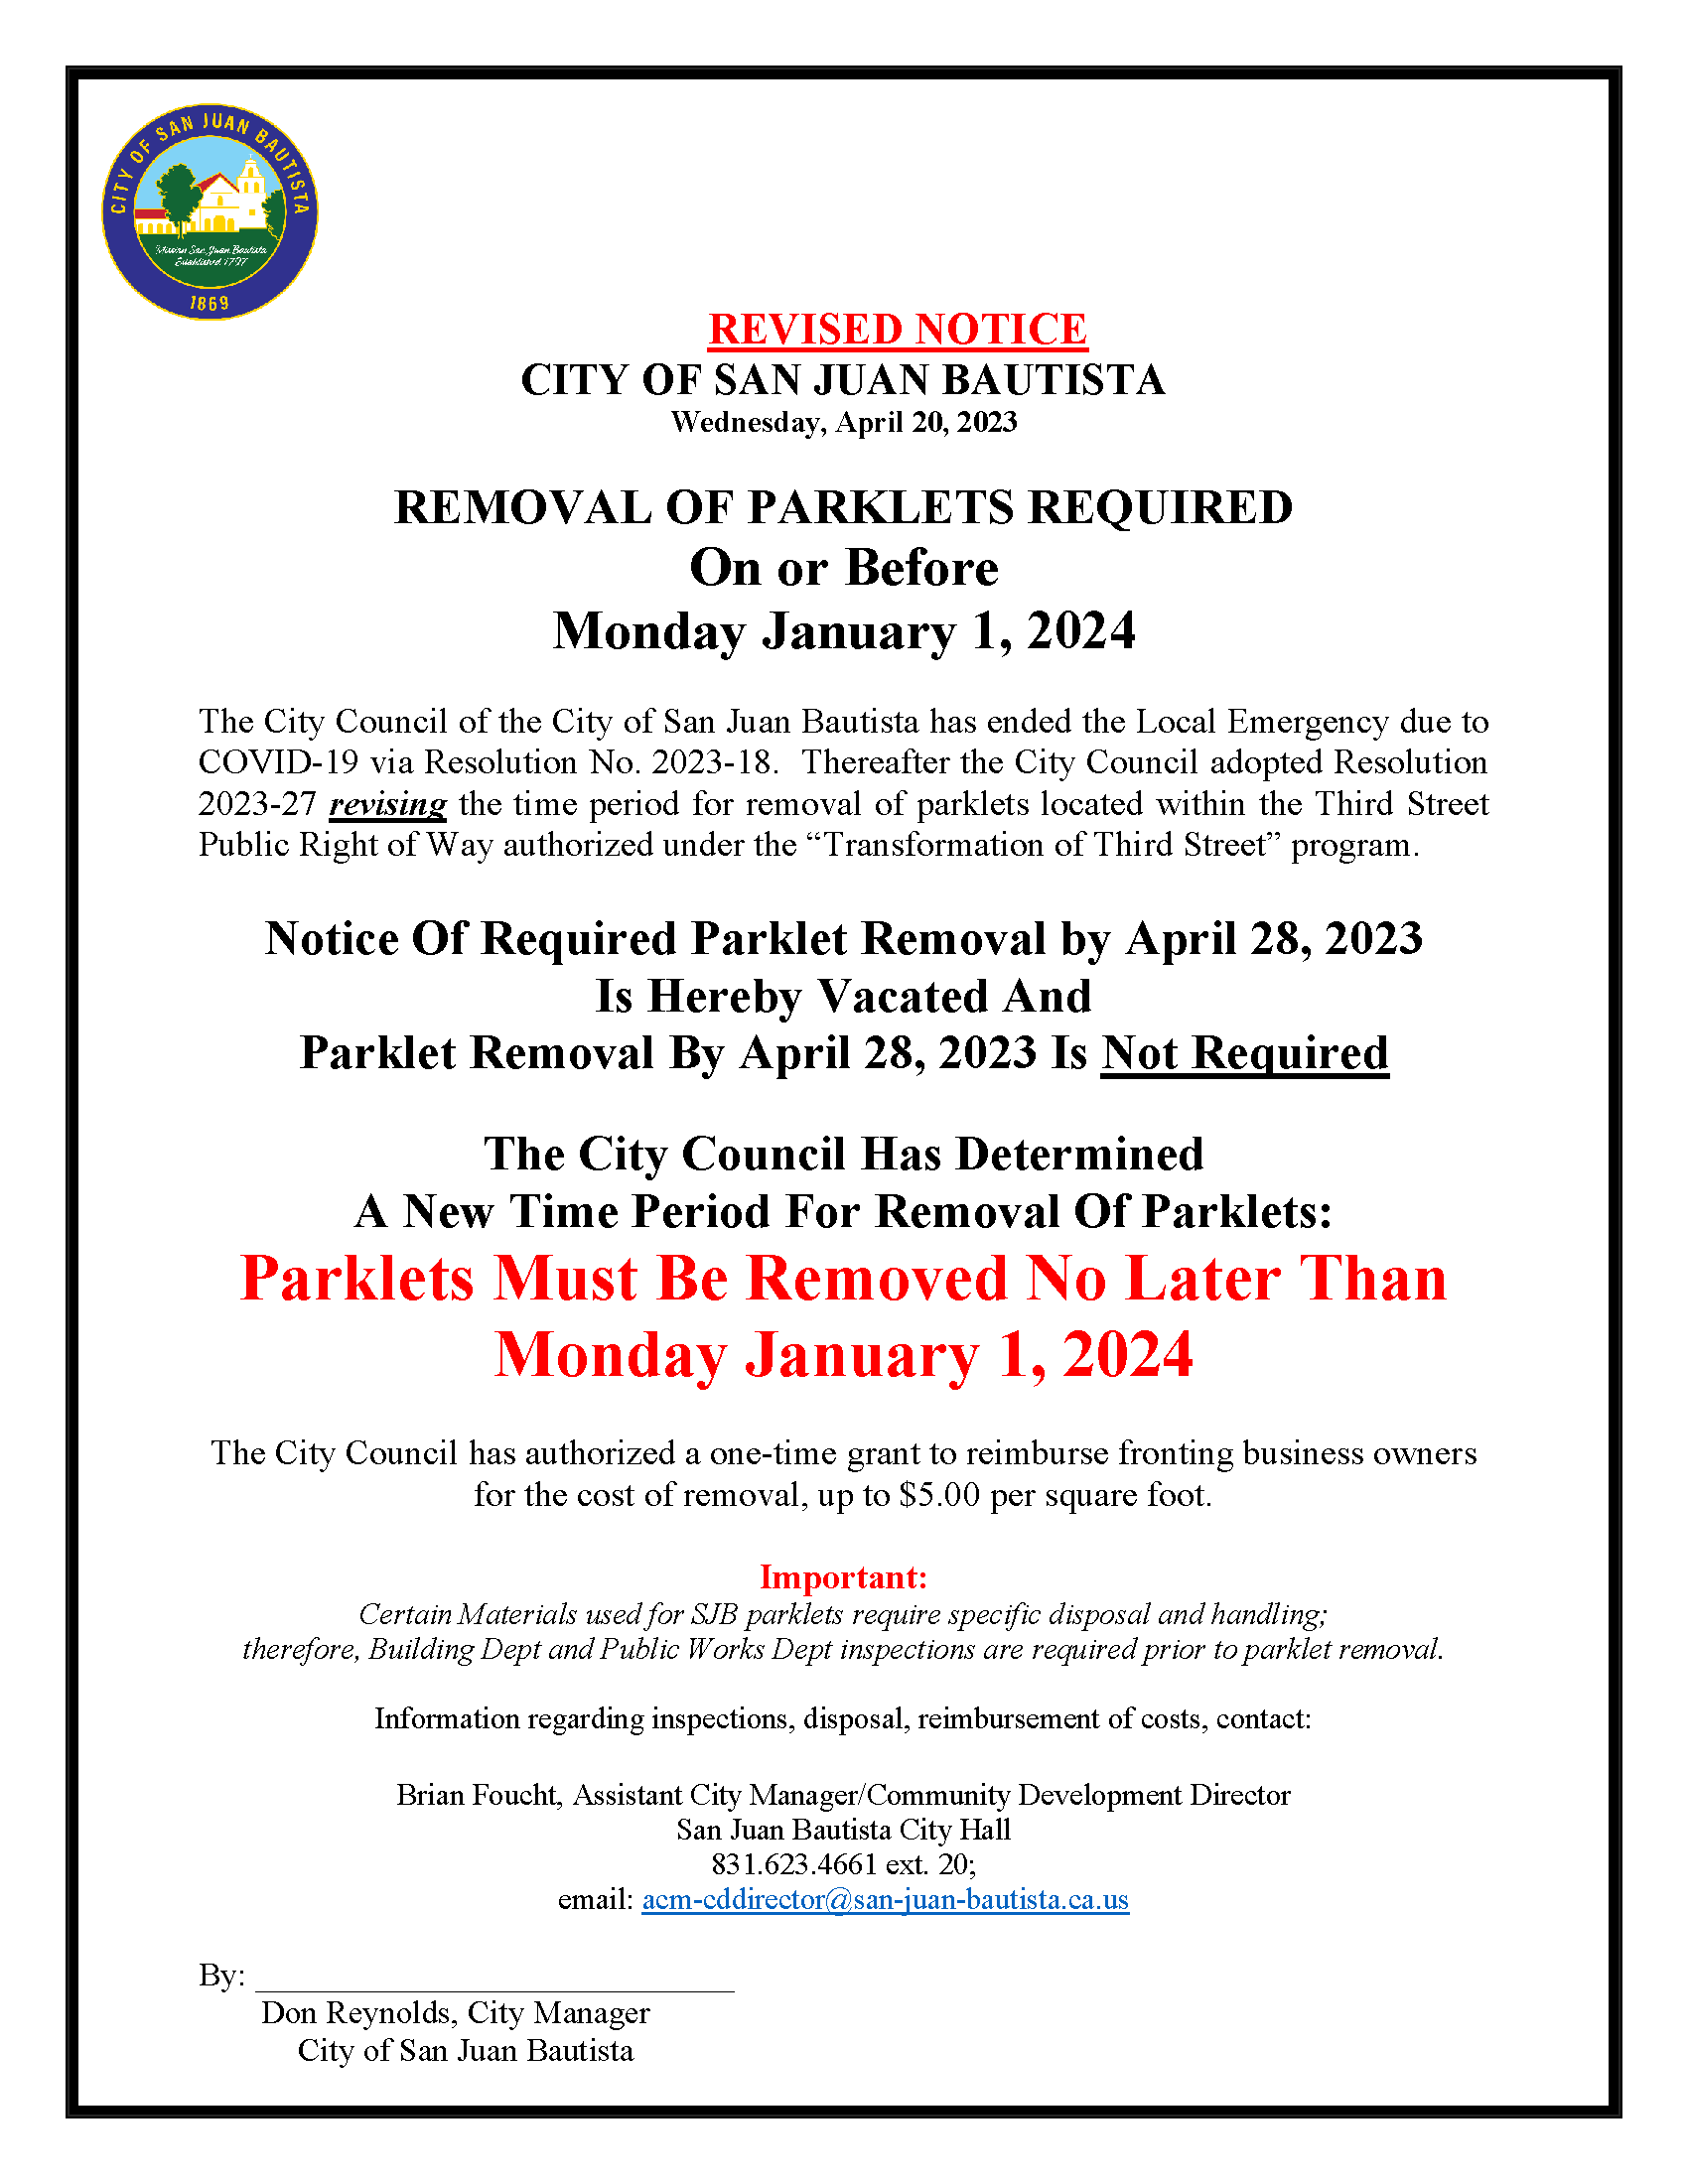 4.20.23 Disposition of Parkets_Pulblic Notice